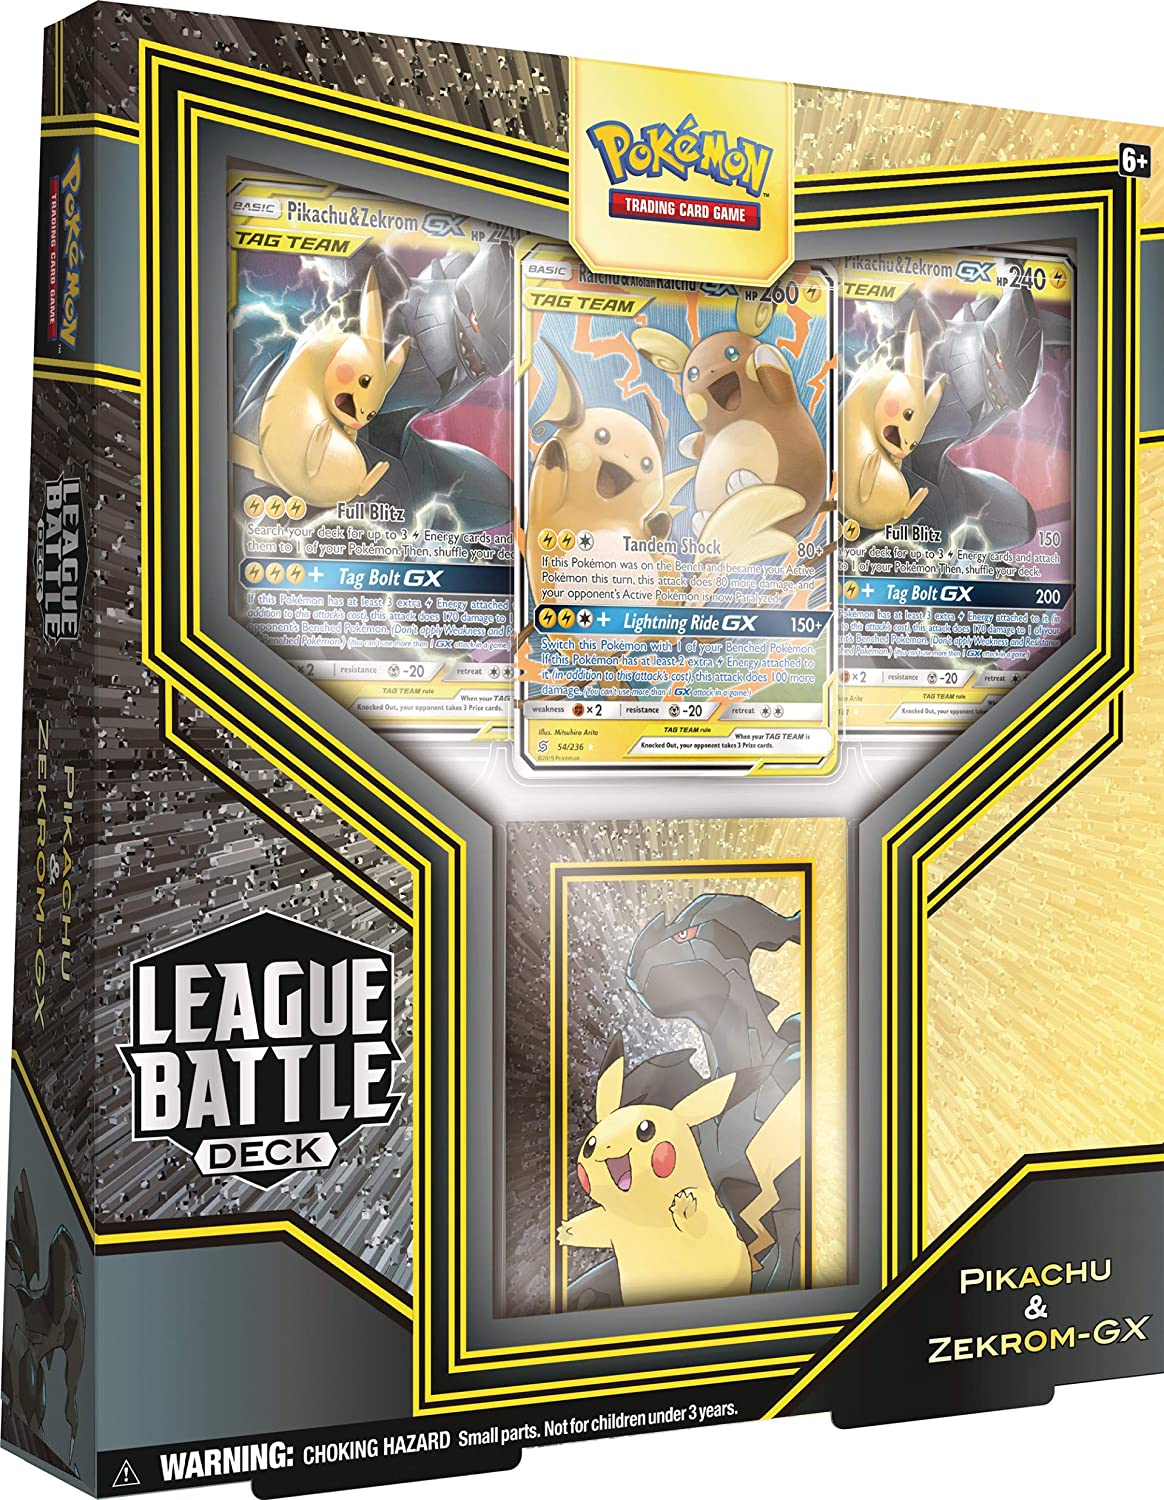 Pokémon TCG: League Battle Decks -  Reshiram & Charizard-GX - Pikachu & Zekrom-GX